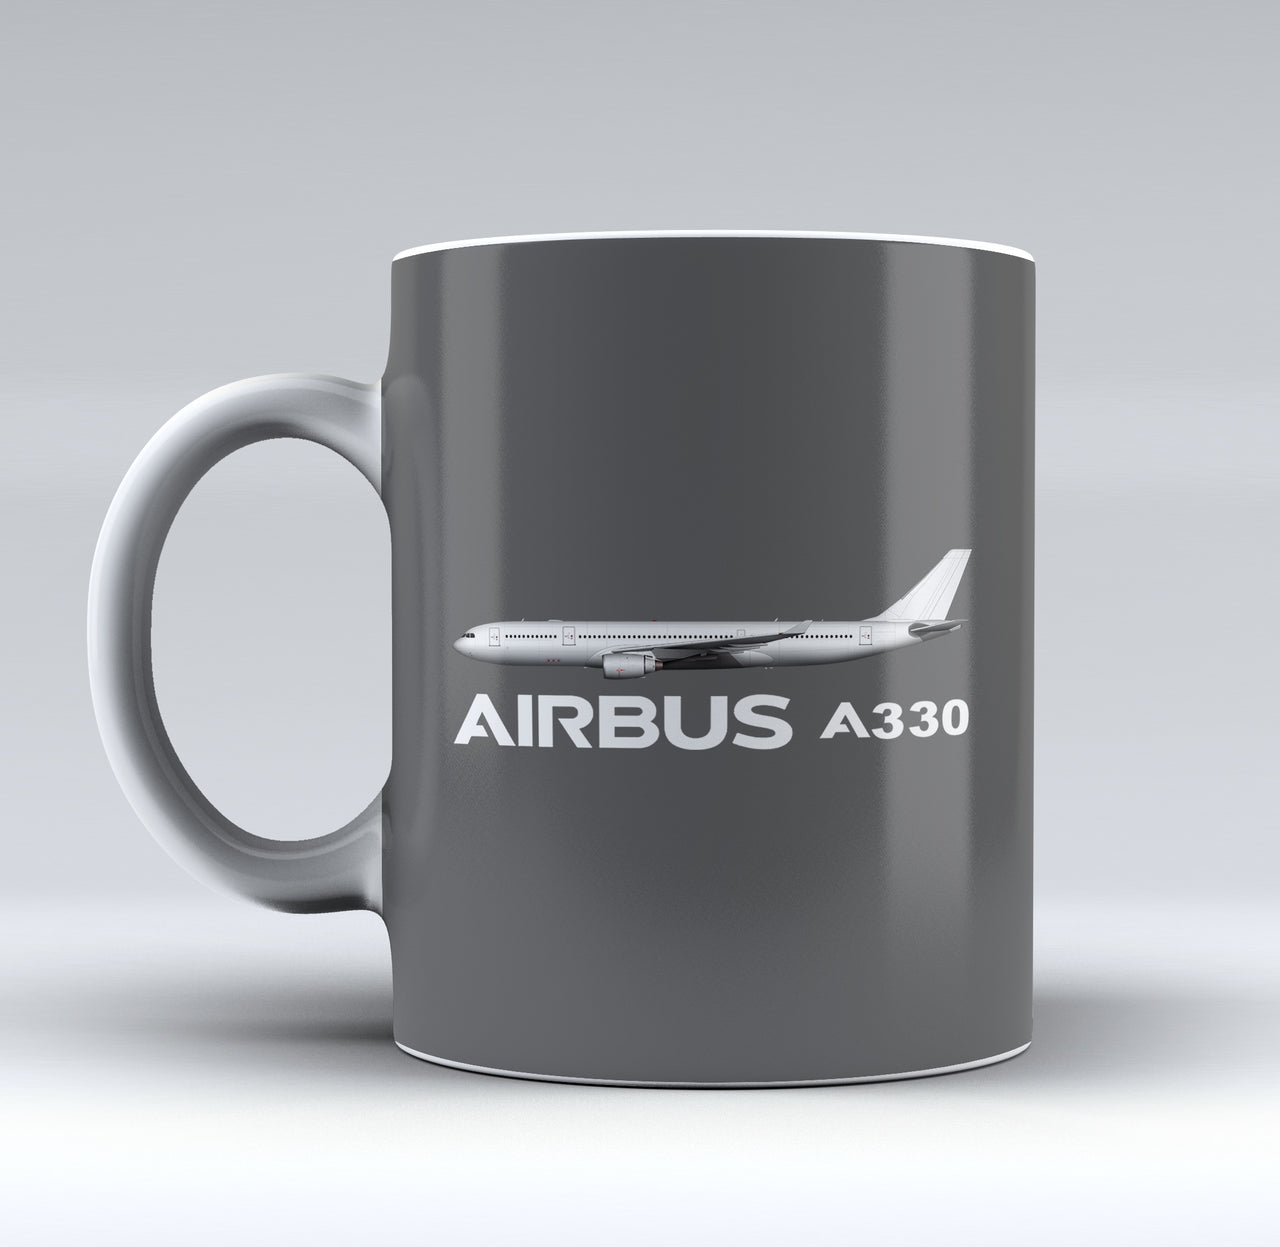 The Airbus A330 Designed Mugs